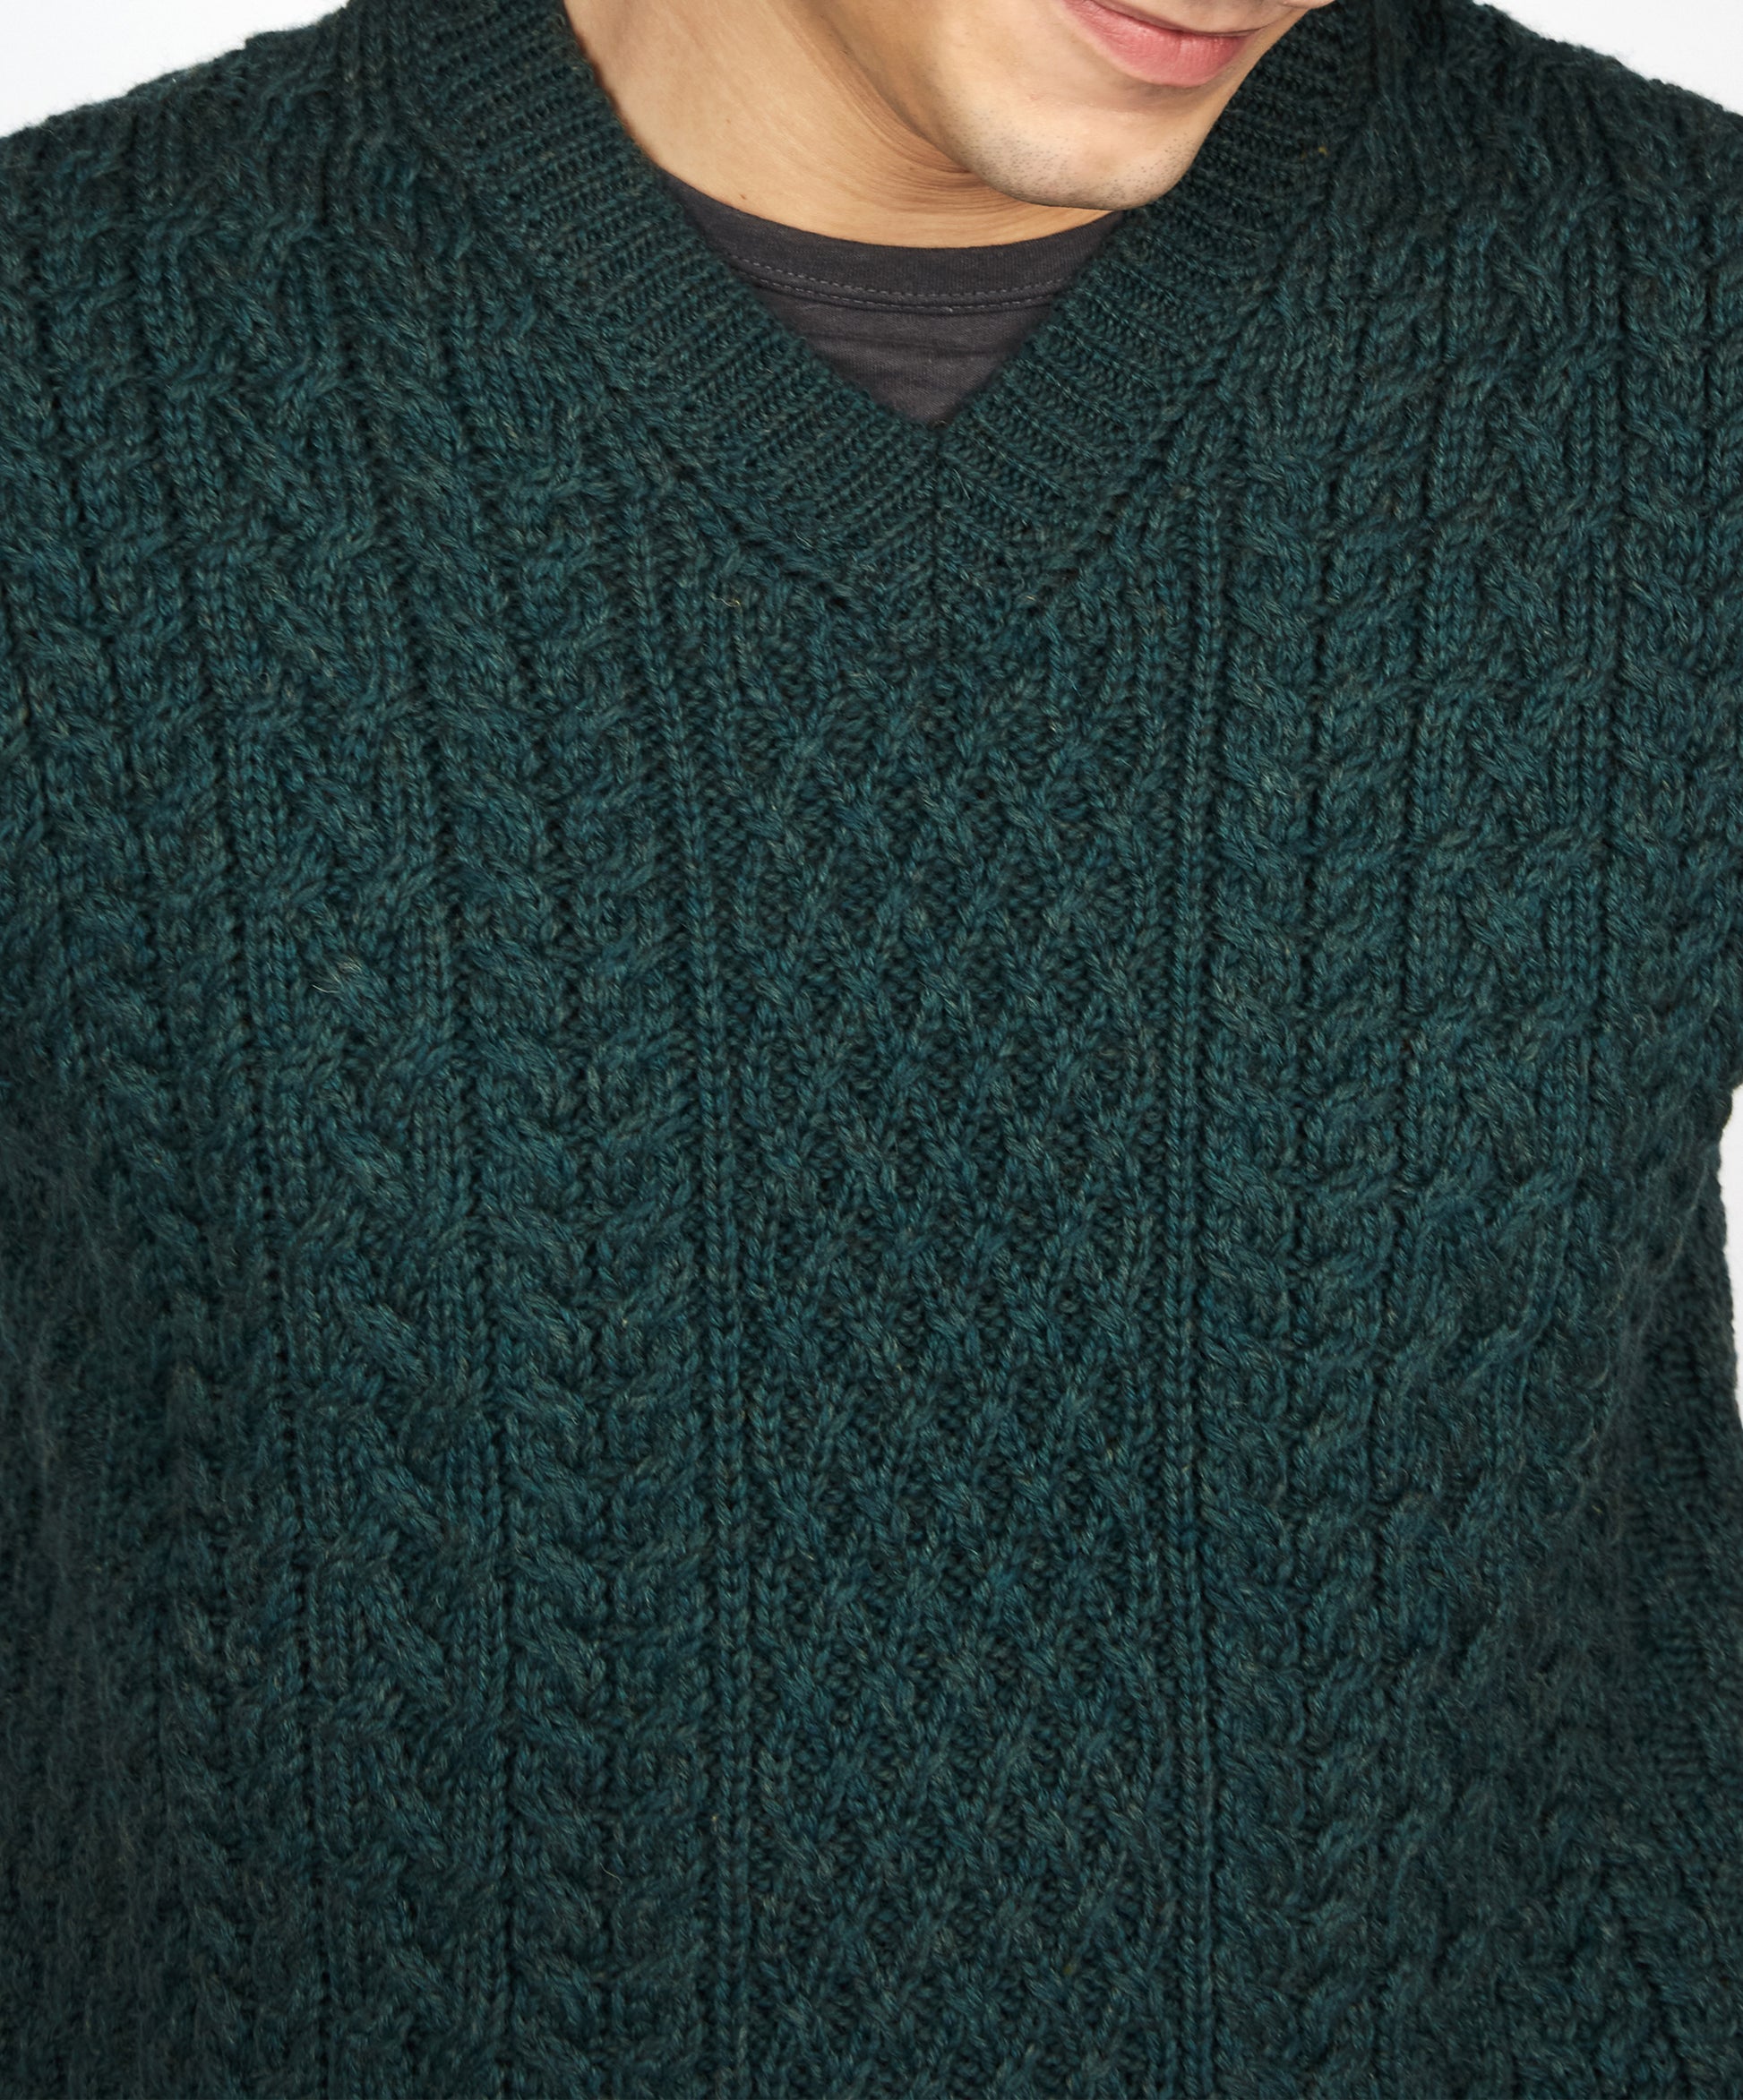 IrelandsEye Knitwear Mens Birch Aran V-Neck Vest in Evergreen